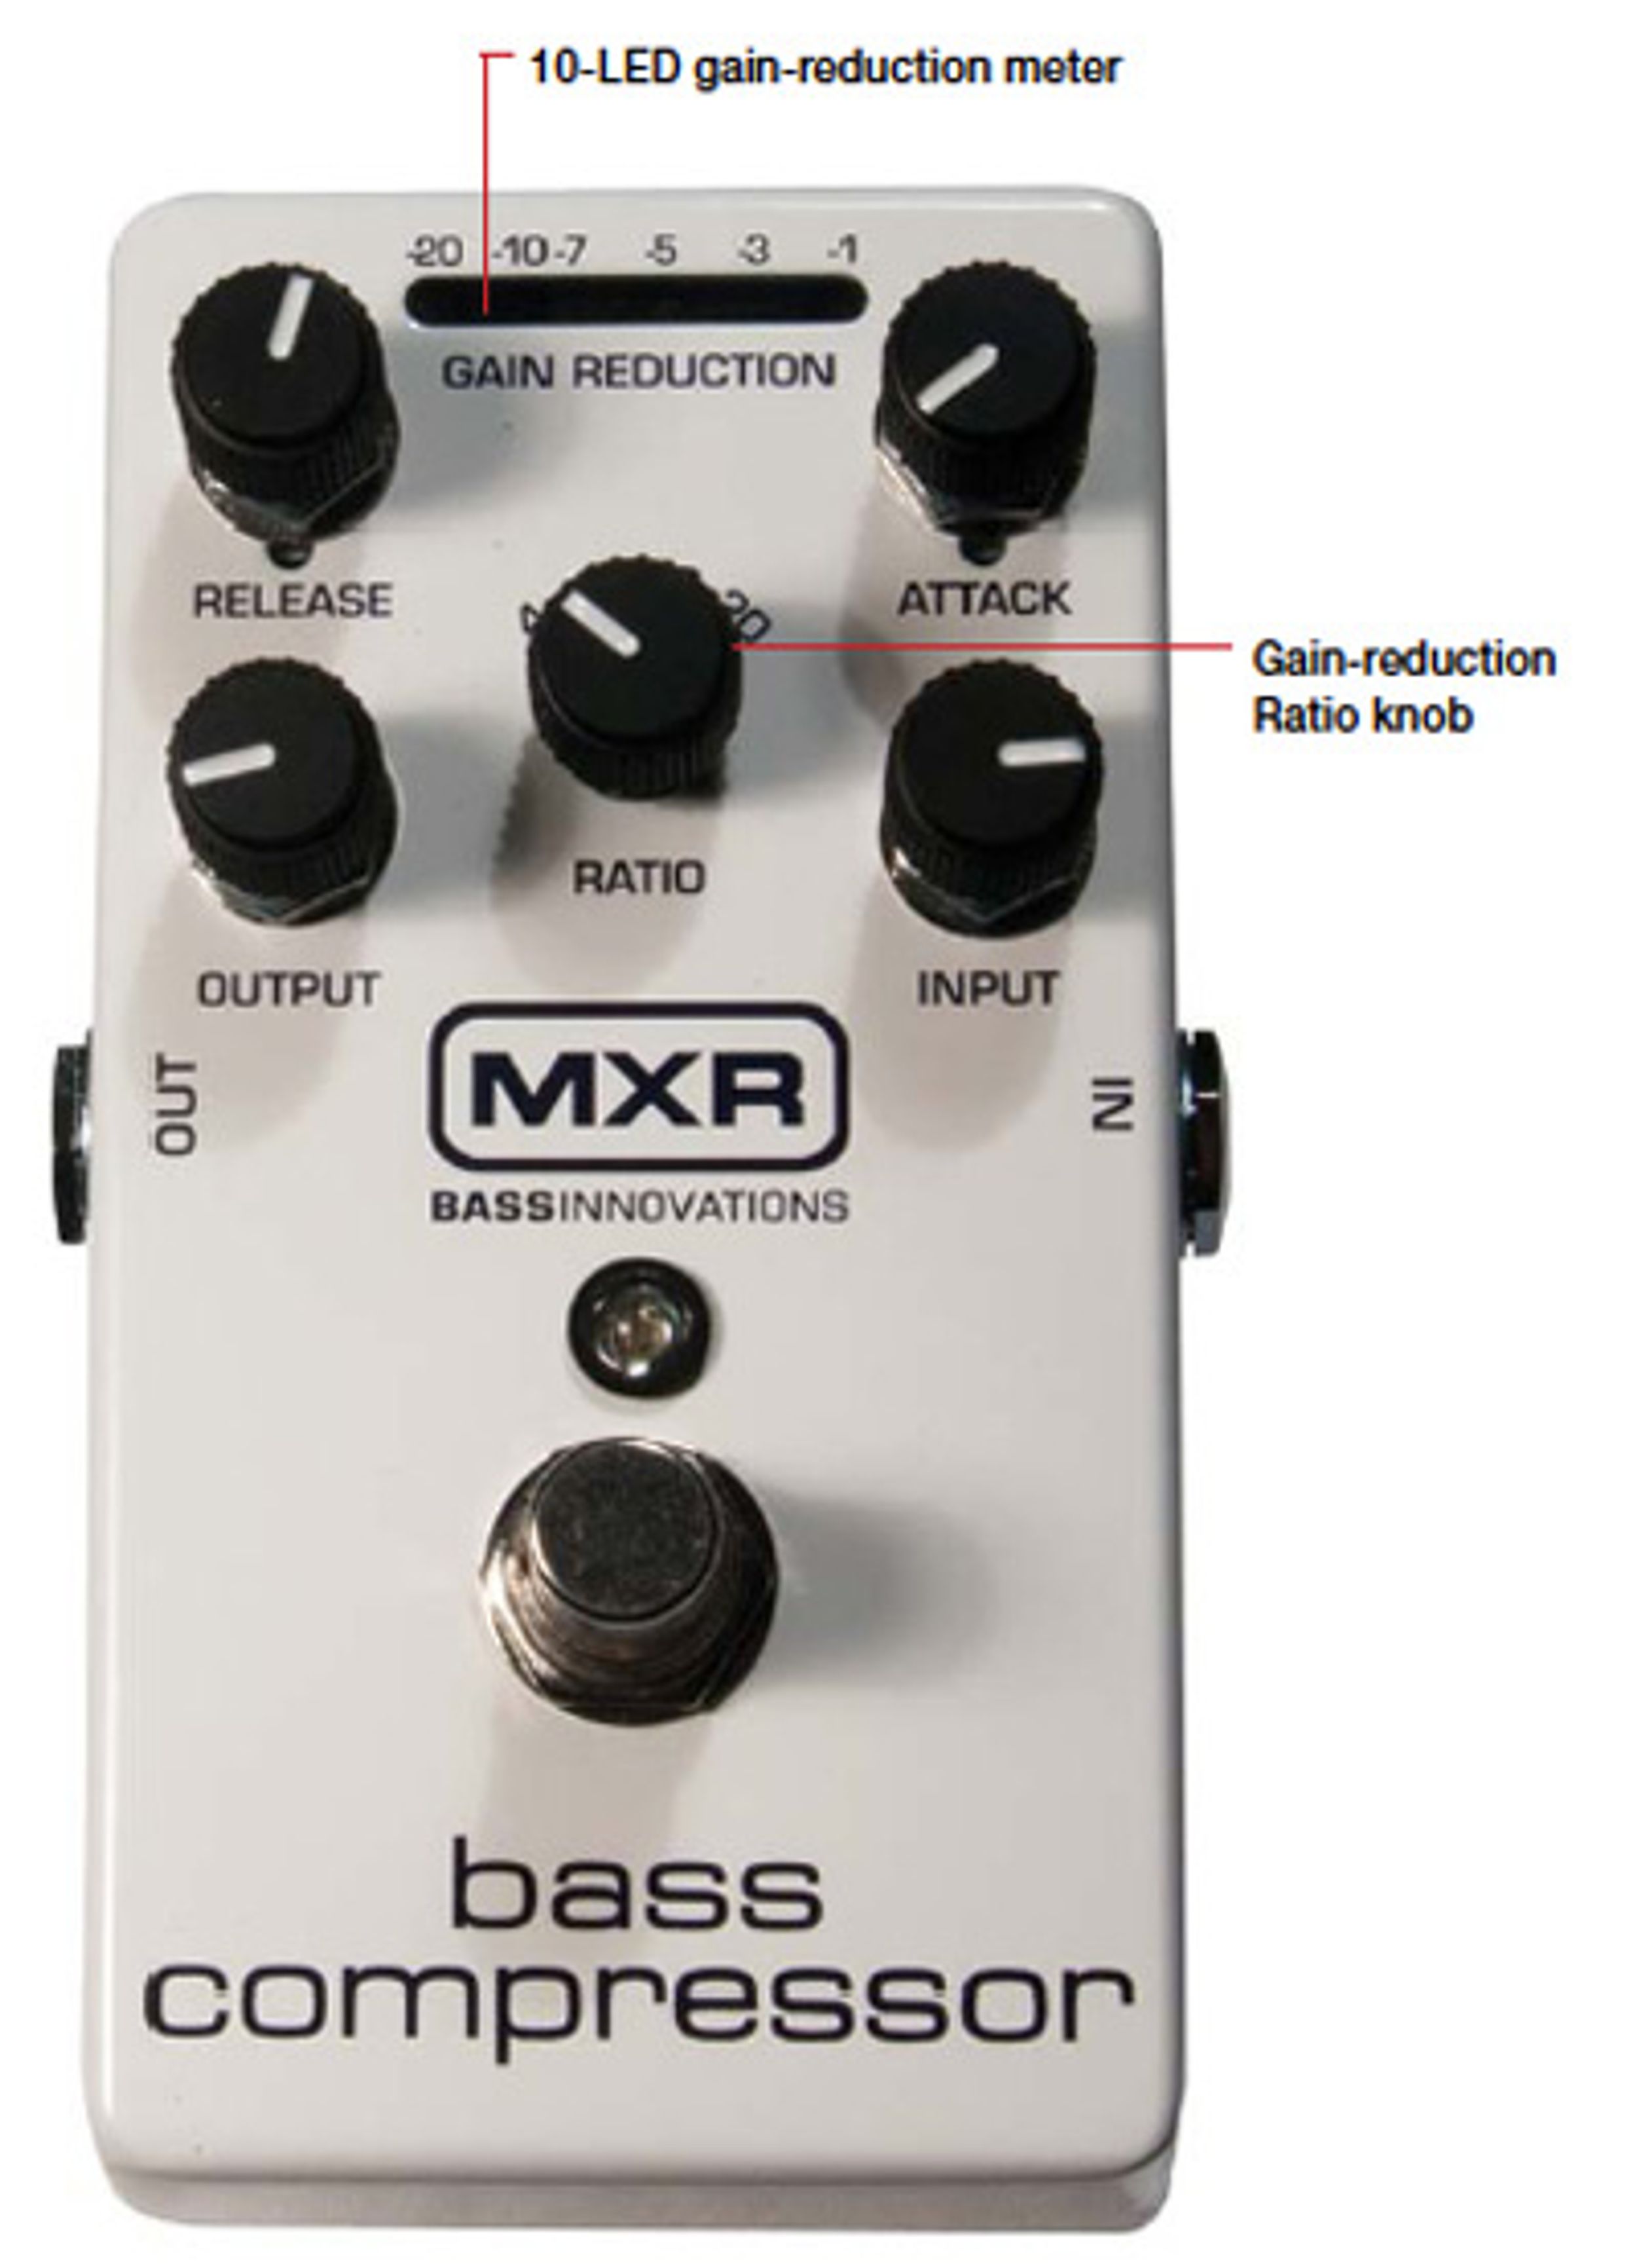 MXR M87 Bass Compressor Pedal Review